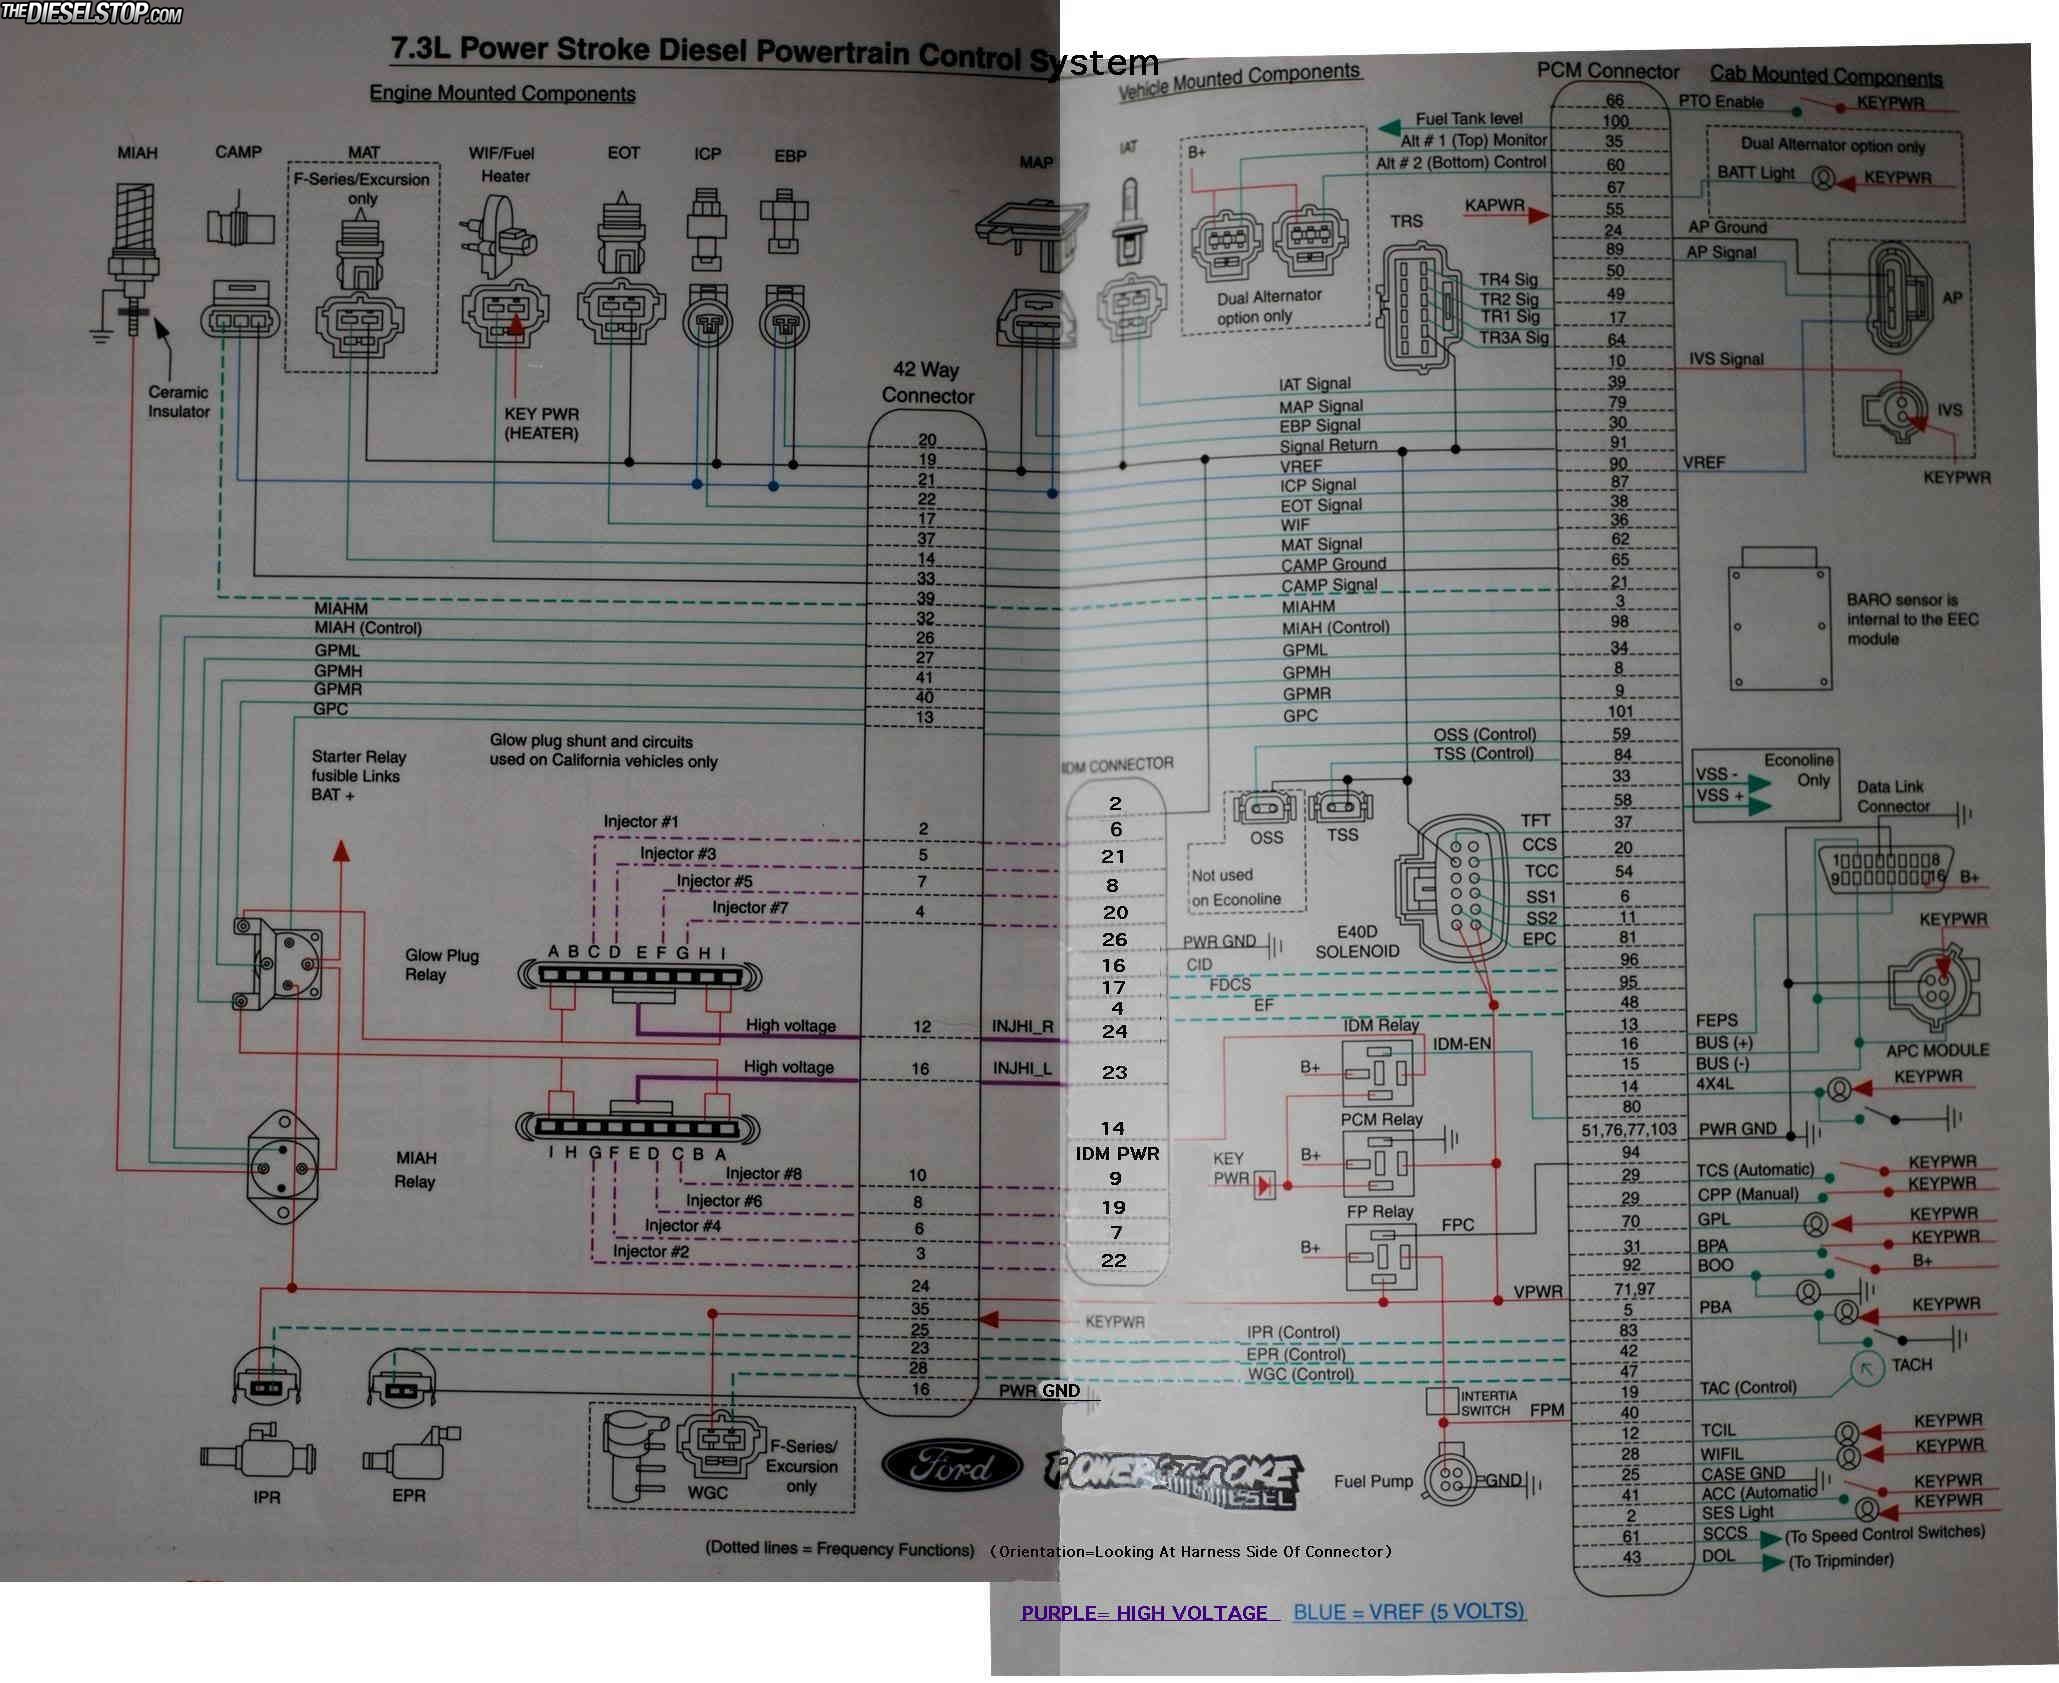 School Bus Engine Compartment Diagram 7 3l Wiring Schematic Printable Very Handy Diesel forum Of School Bus Engine Compartment Diagram